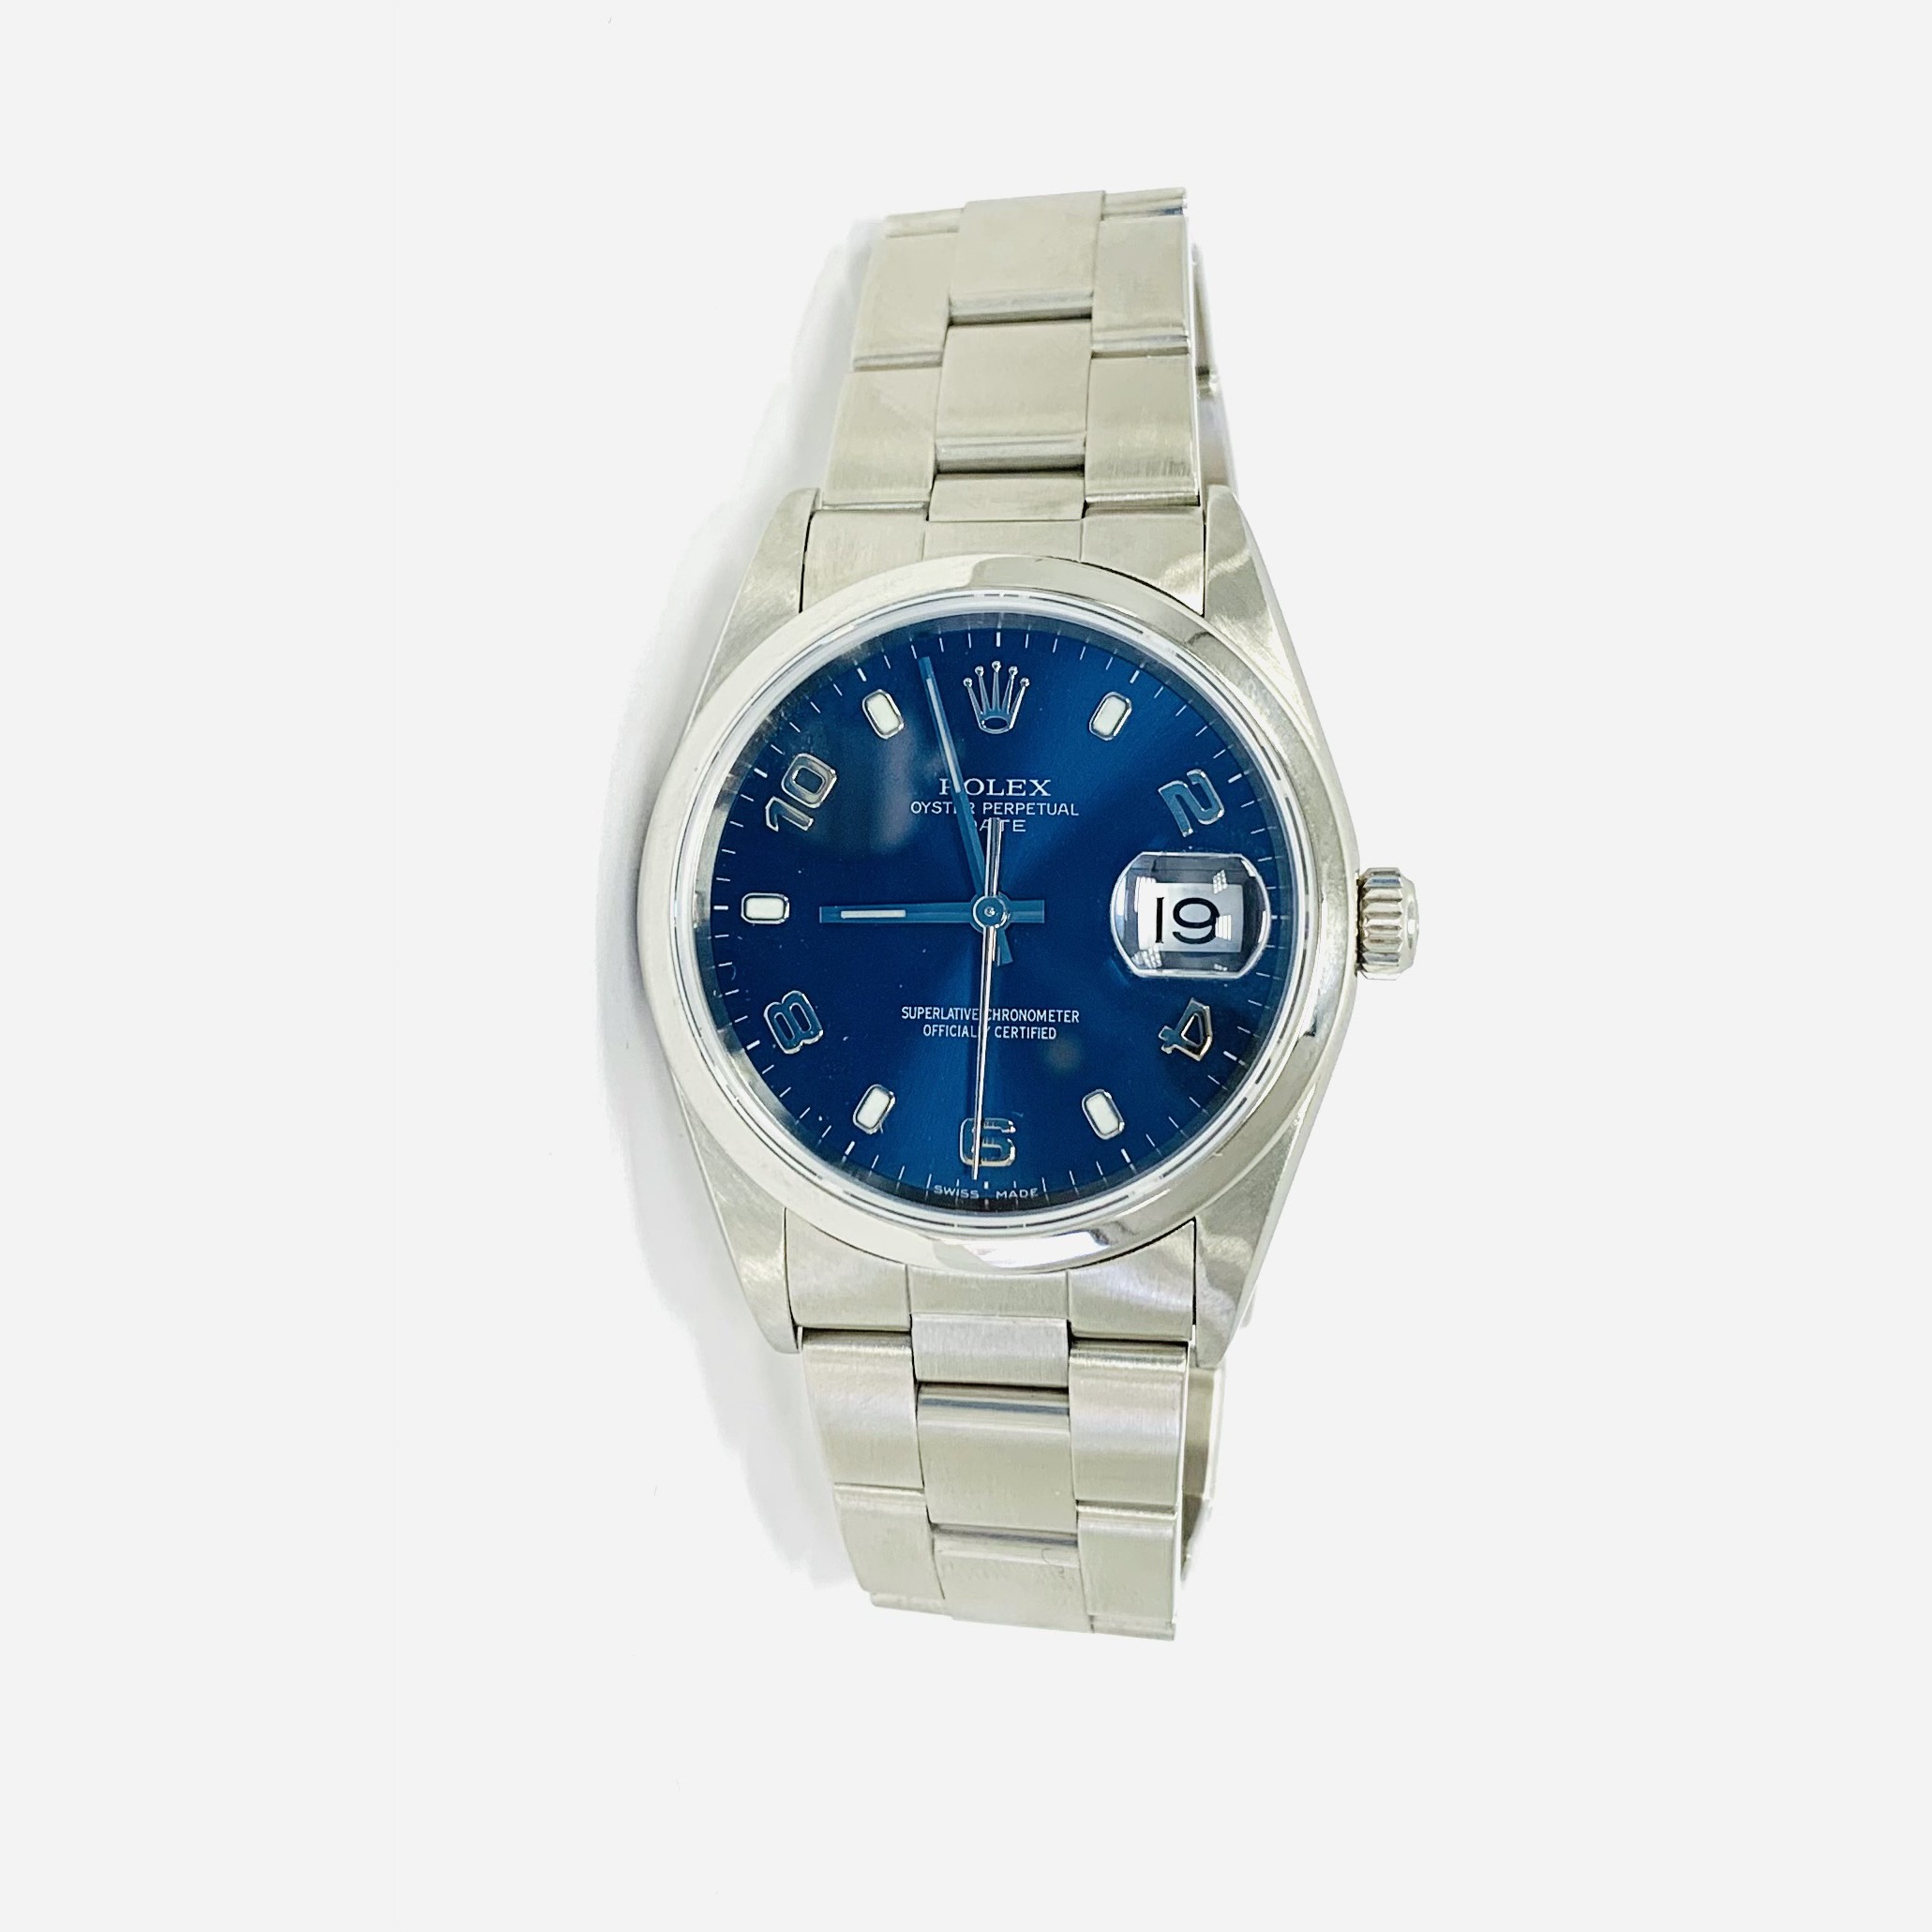 Rolex 15200 Date Blue Face Watch